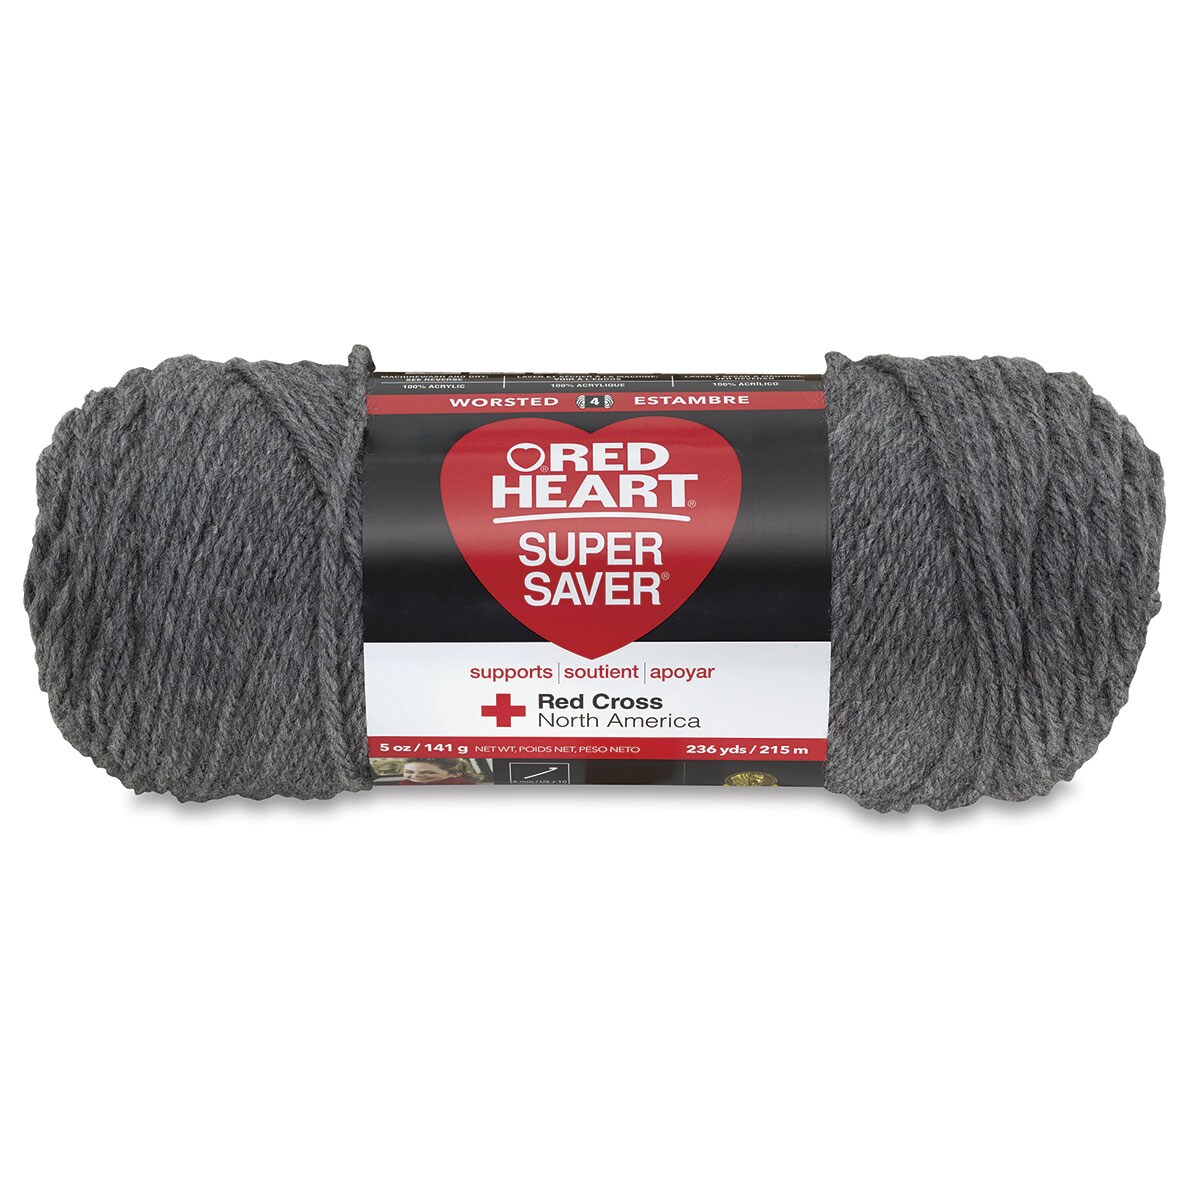 Red Heart Super Saver Yarn - Grey Heather, 5 oz